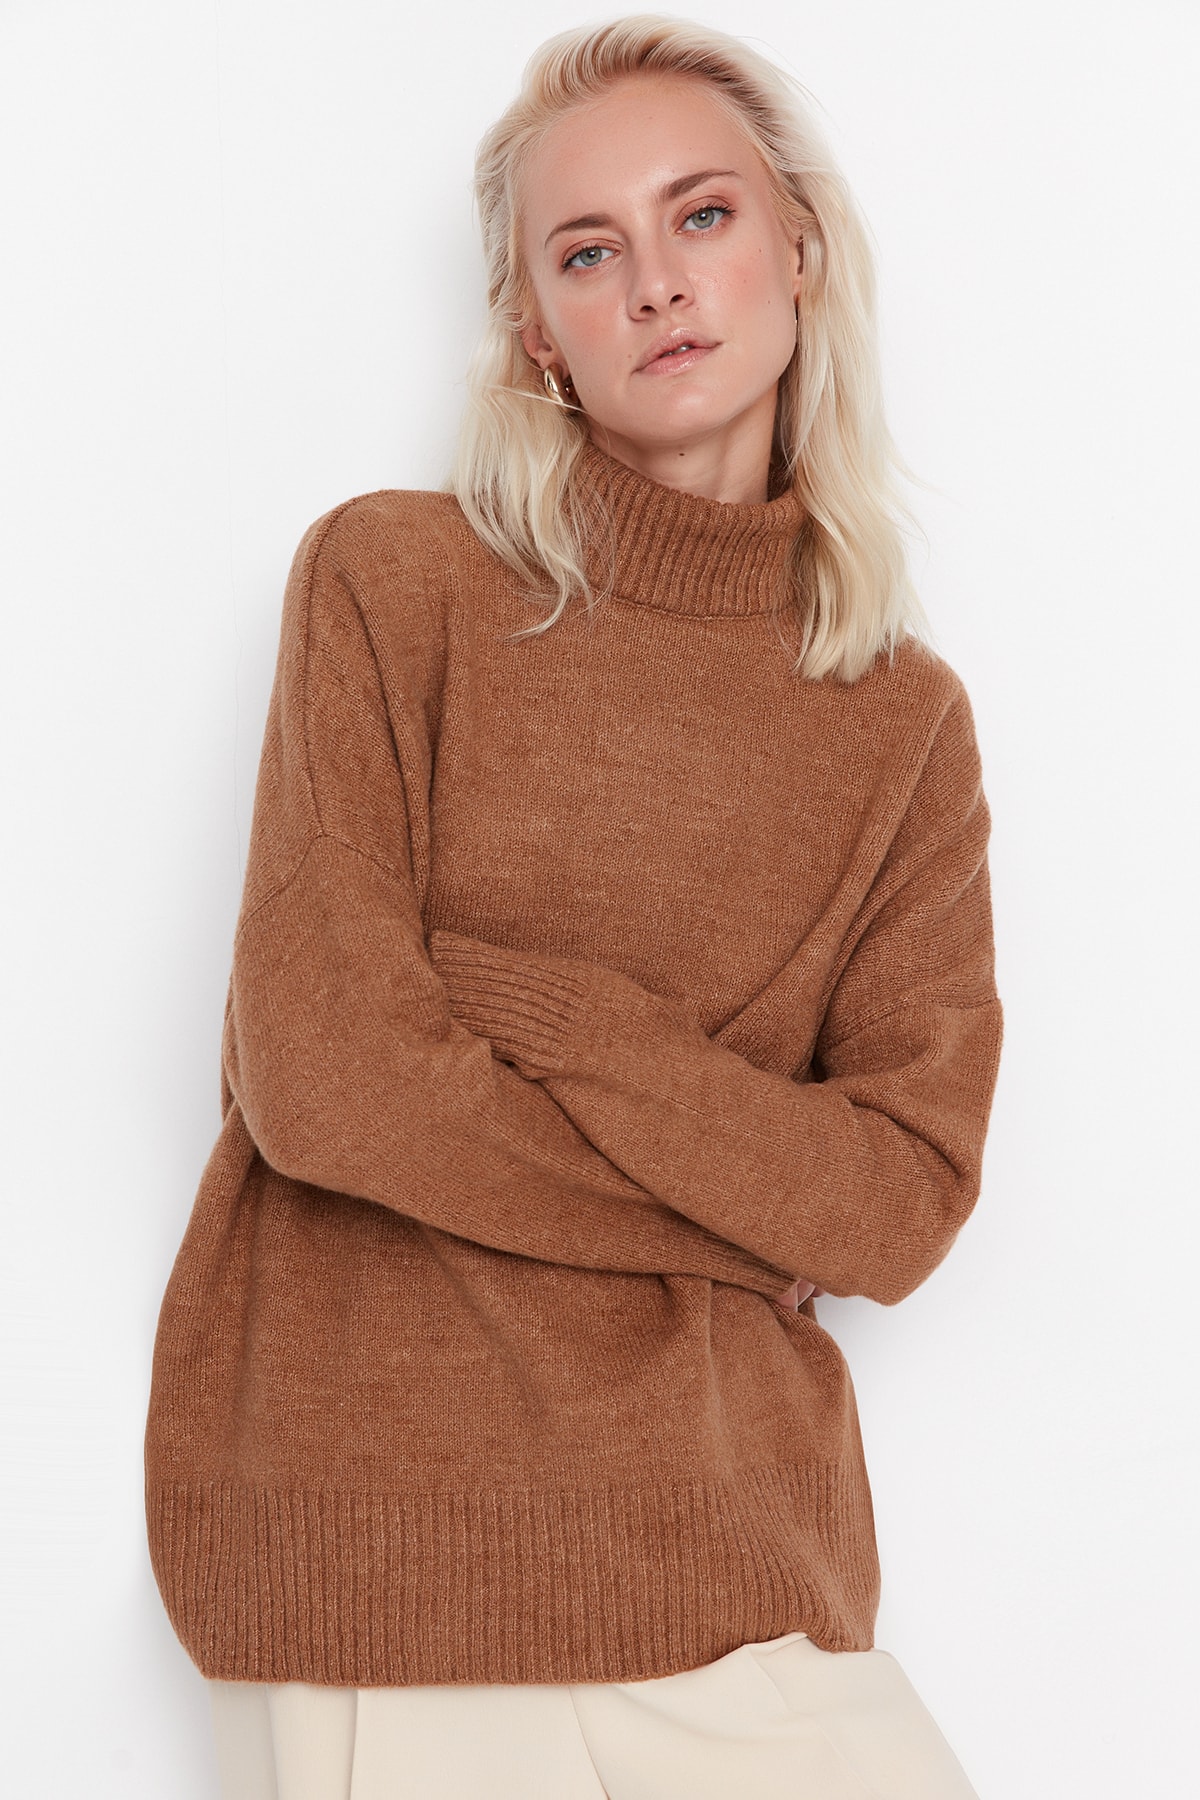 Trendyol Light Brown Wide Fit, Soft Textured Standing Collar Knitwear Sweater